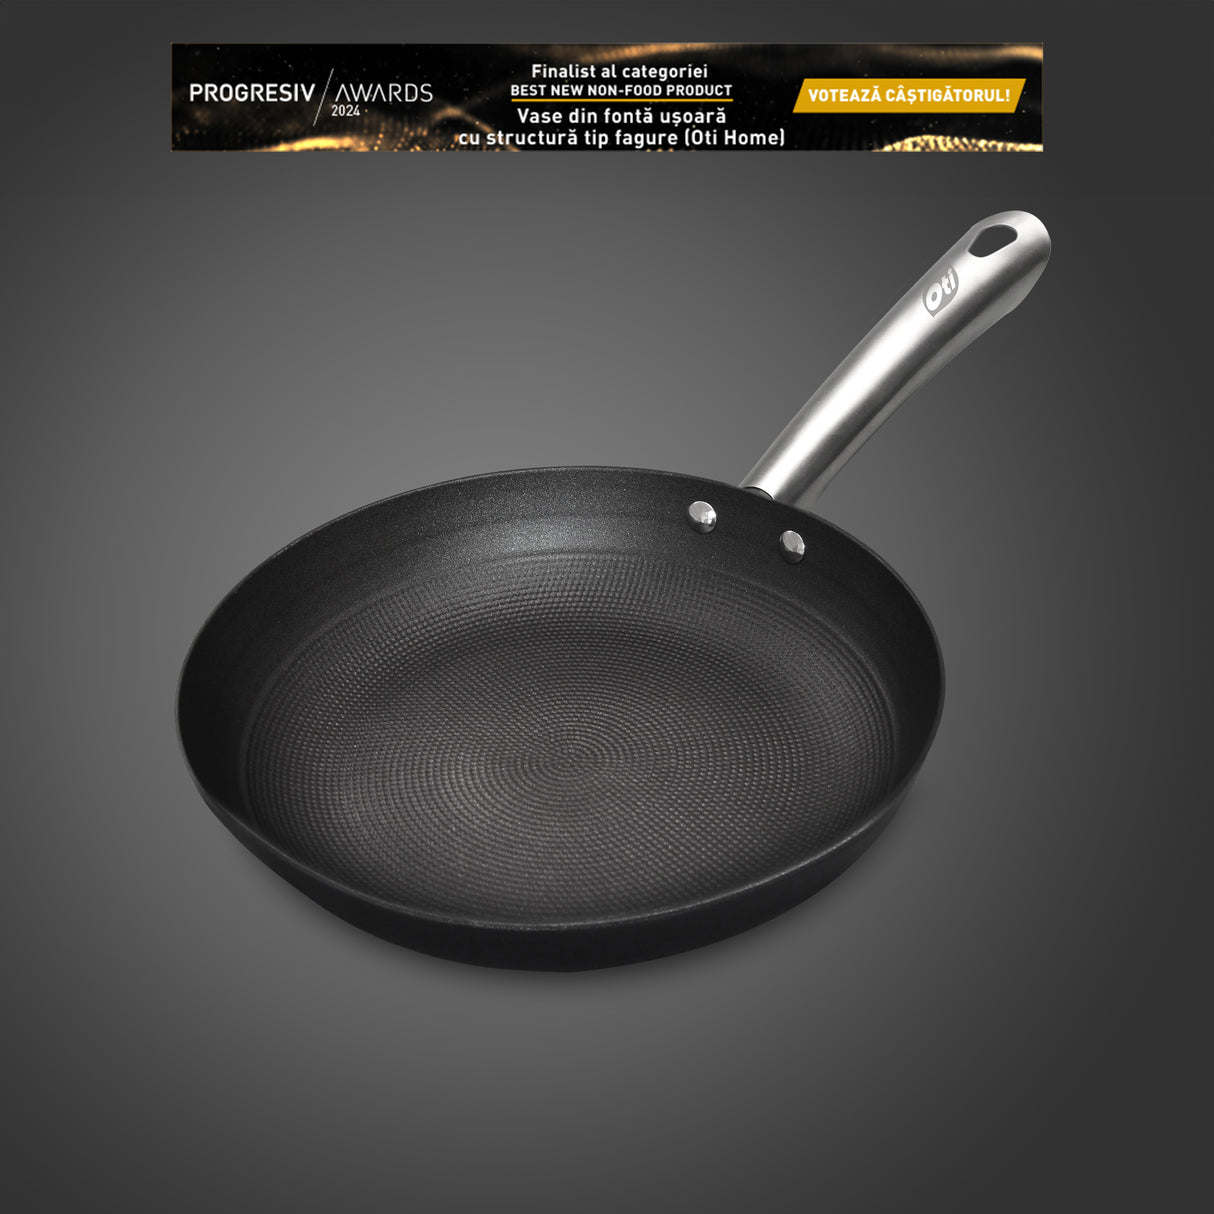 Oti lightweight cast iron honeycomb pan